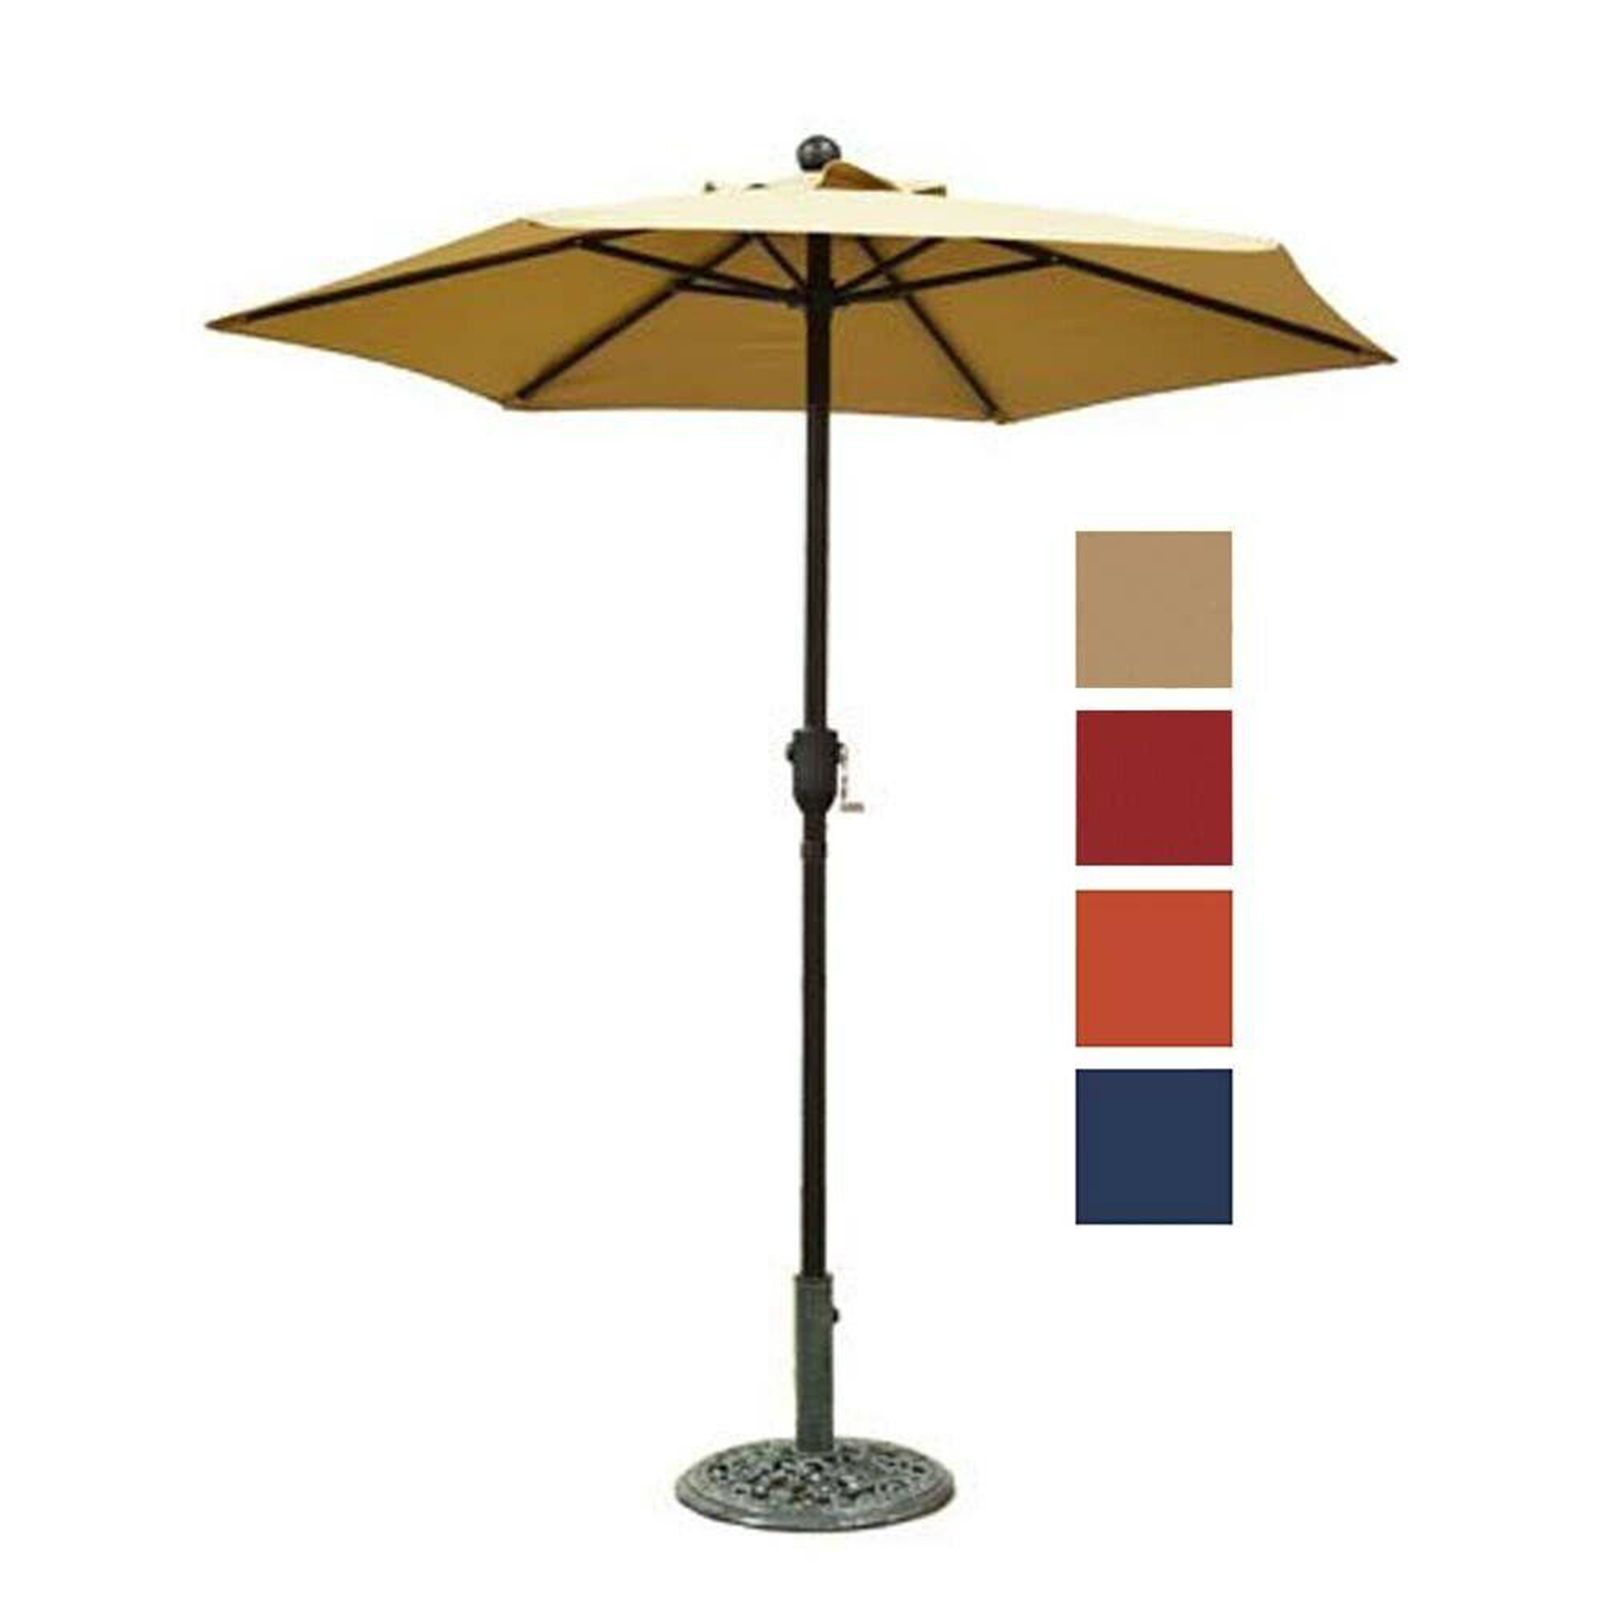 sturdy patio umbrella